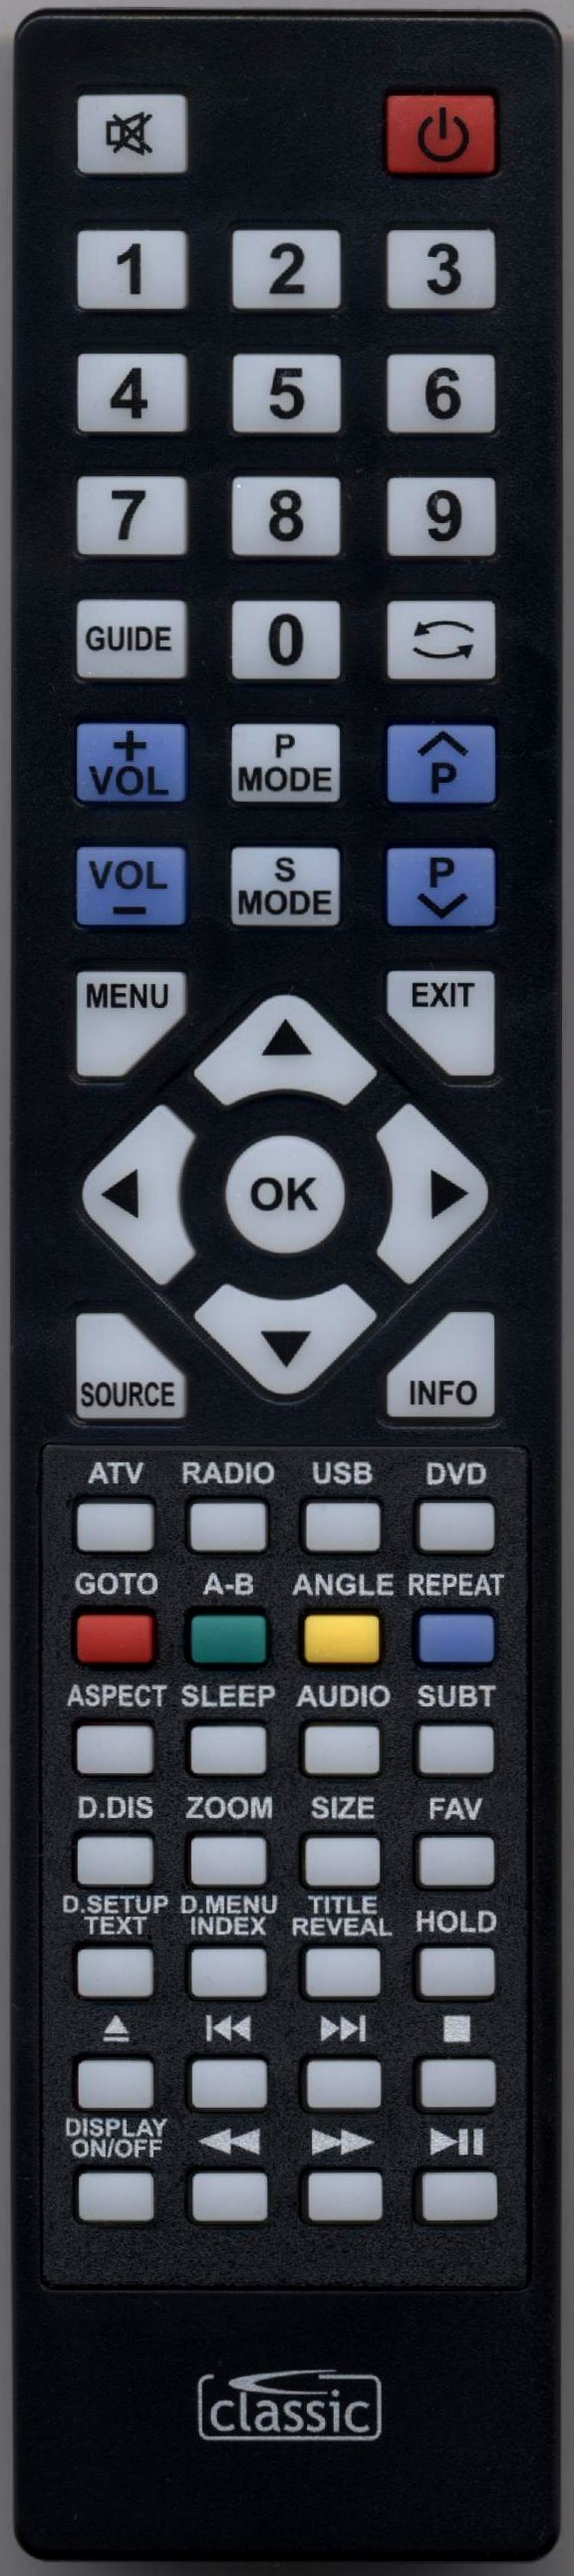 UMC X2656G Remote Control Alternative